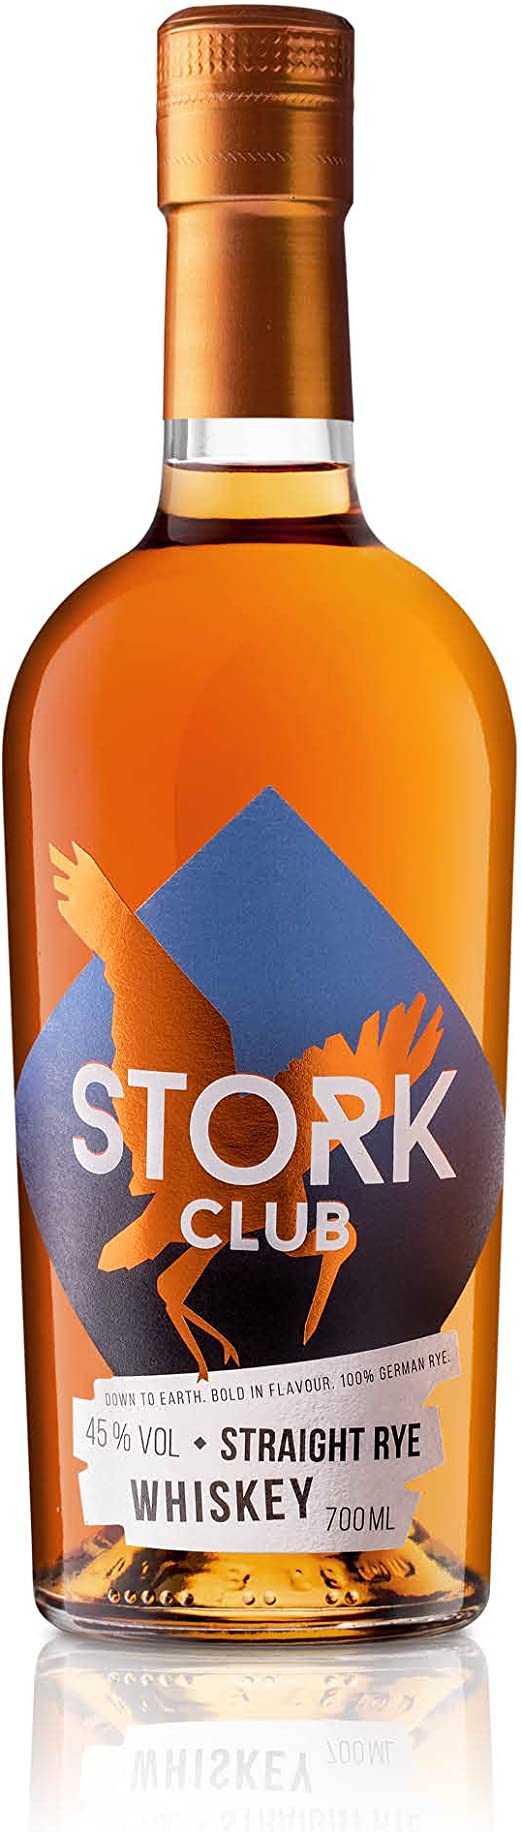 Buy Stork House Full Proof Rye Whiskey Online -Craft City